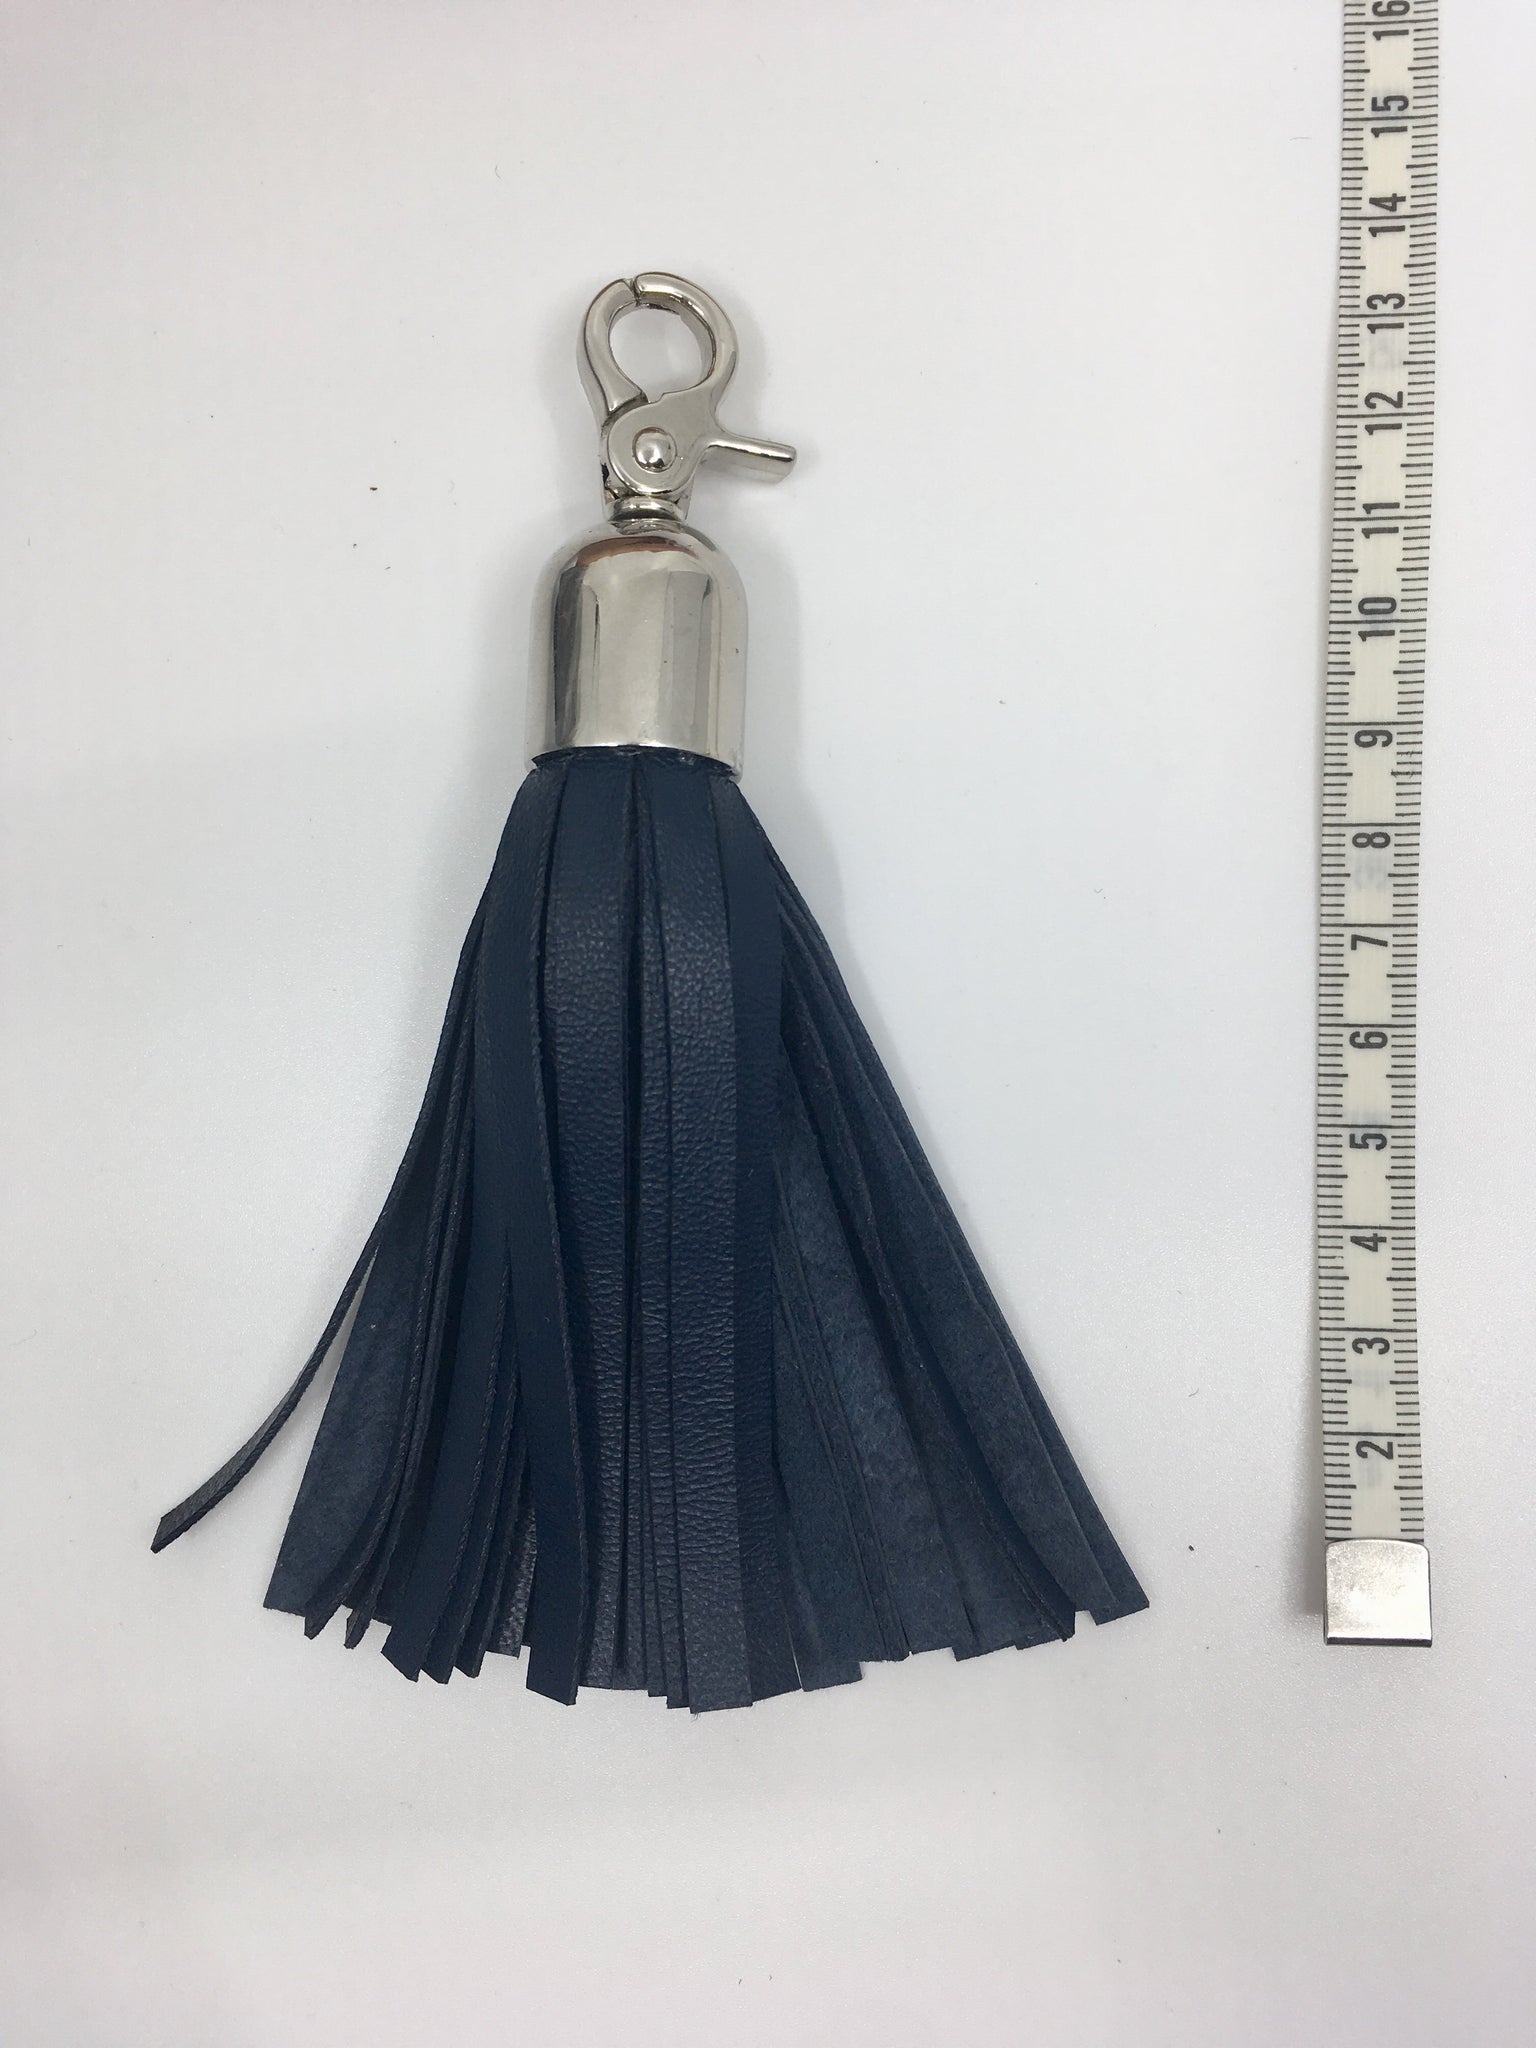 Quaste Taschenanhänger dunkelblau/silber gross